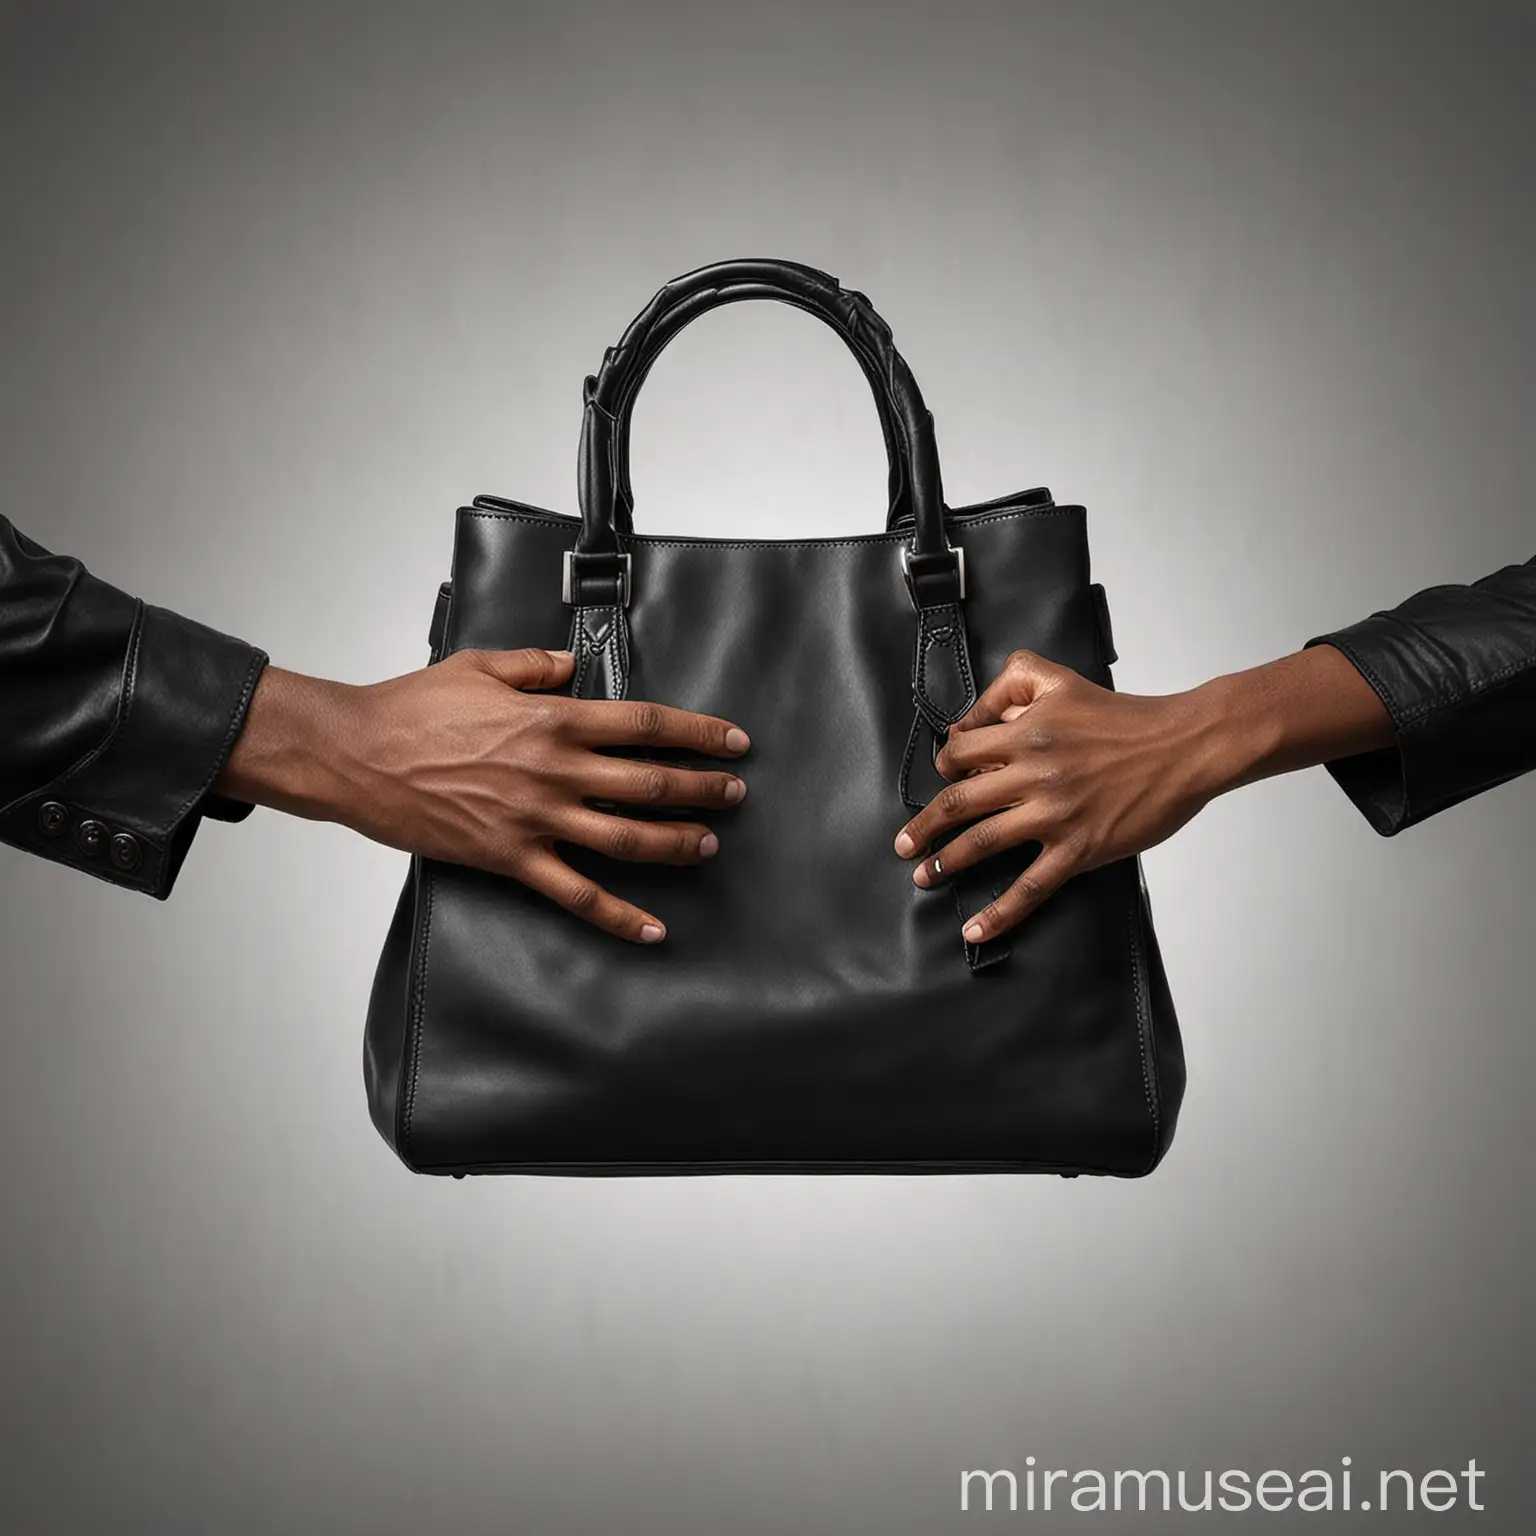 African Hands in TugofWar over Stylish Black Handbag